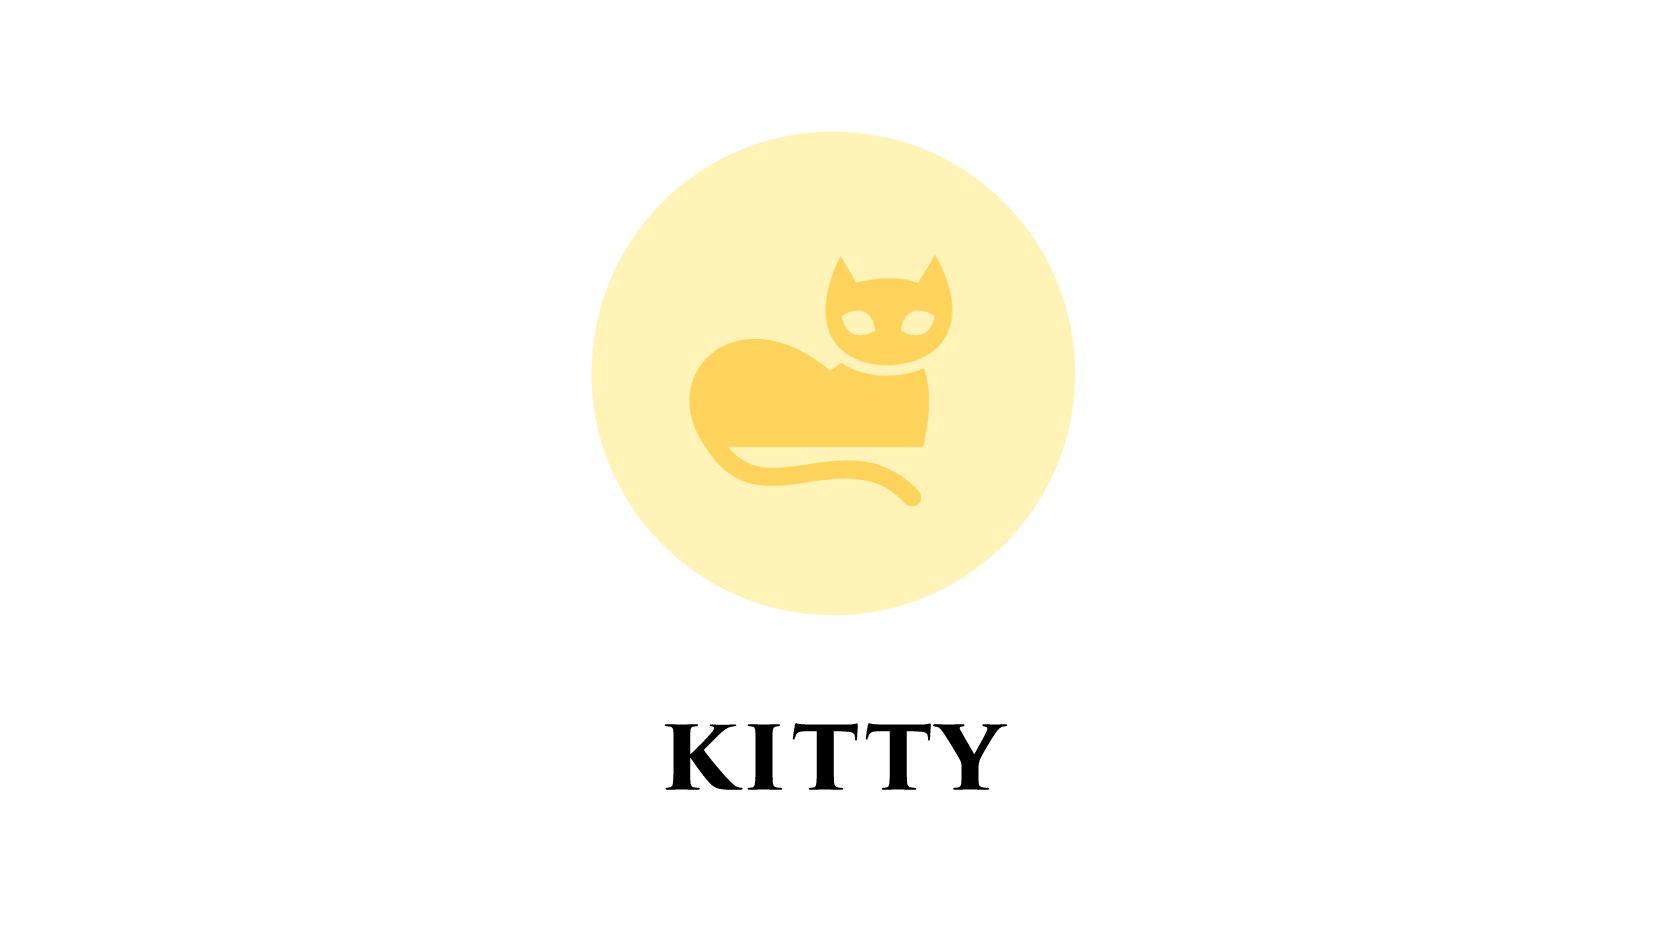 pairs_simple_icons_ペアーズアイコン_kitty